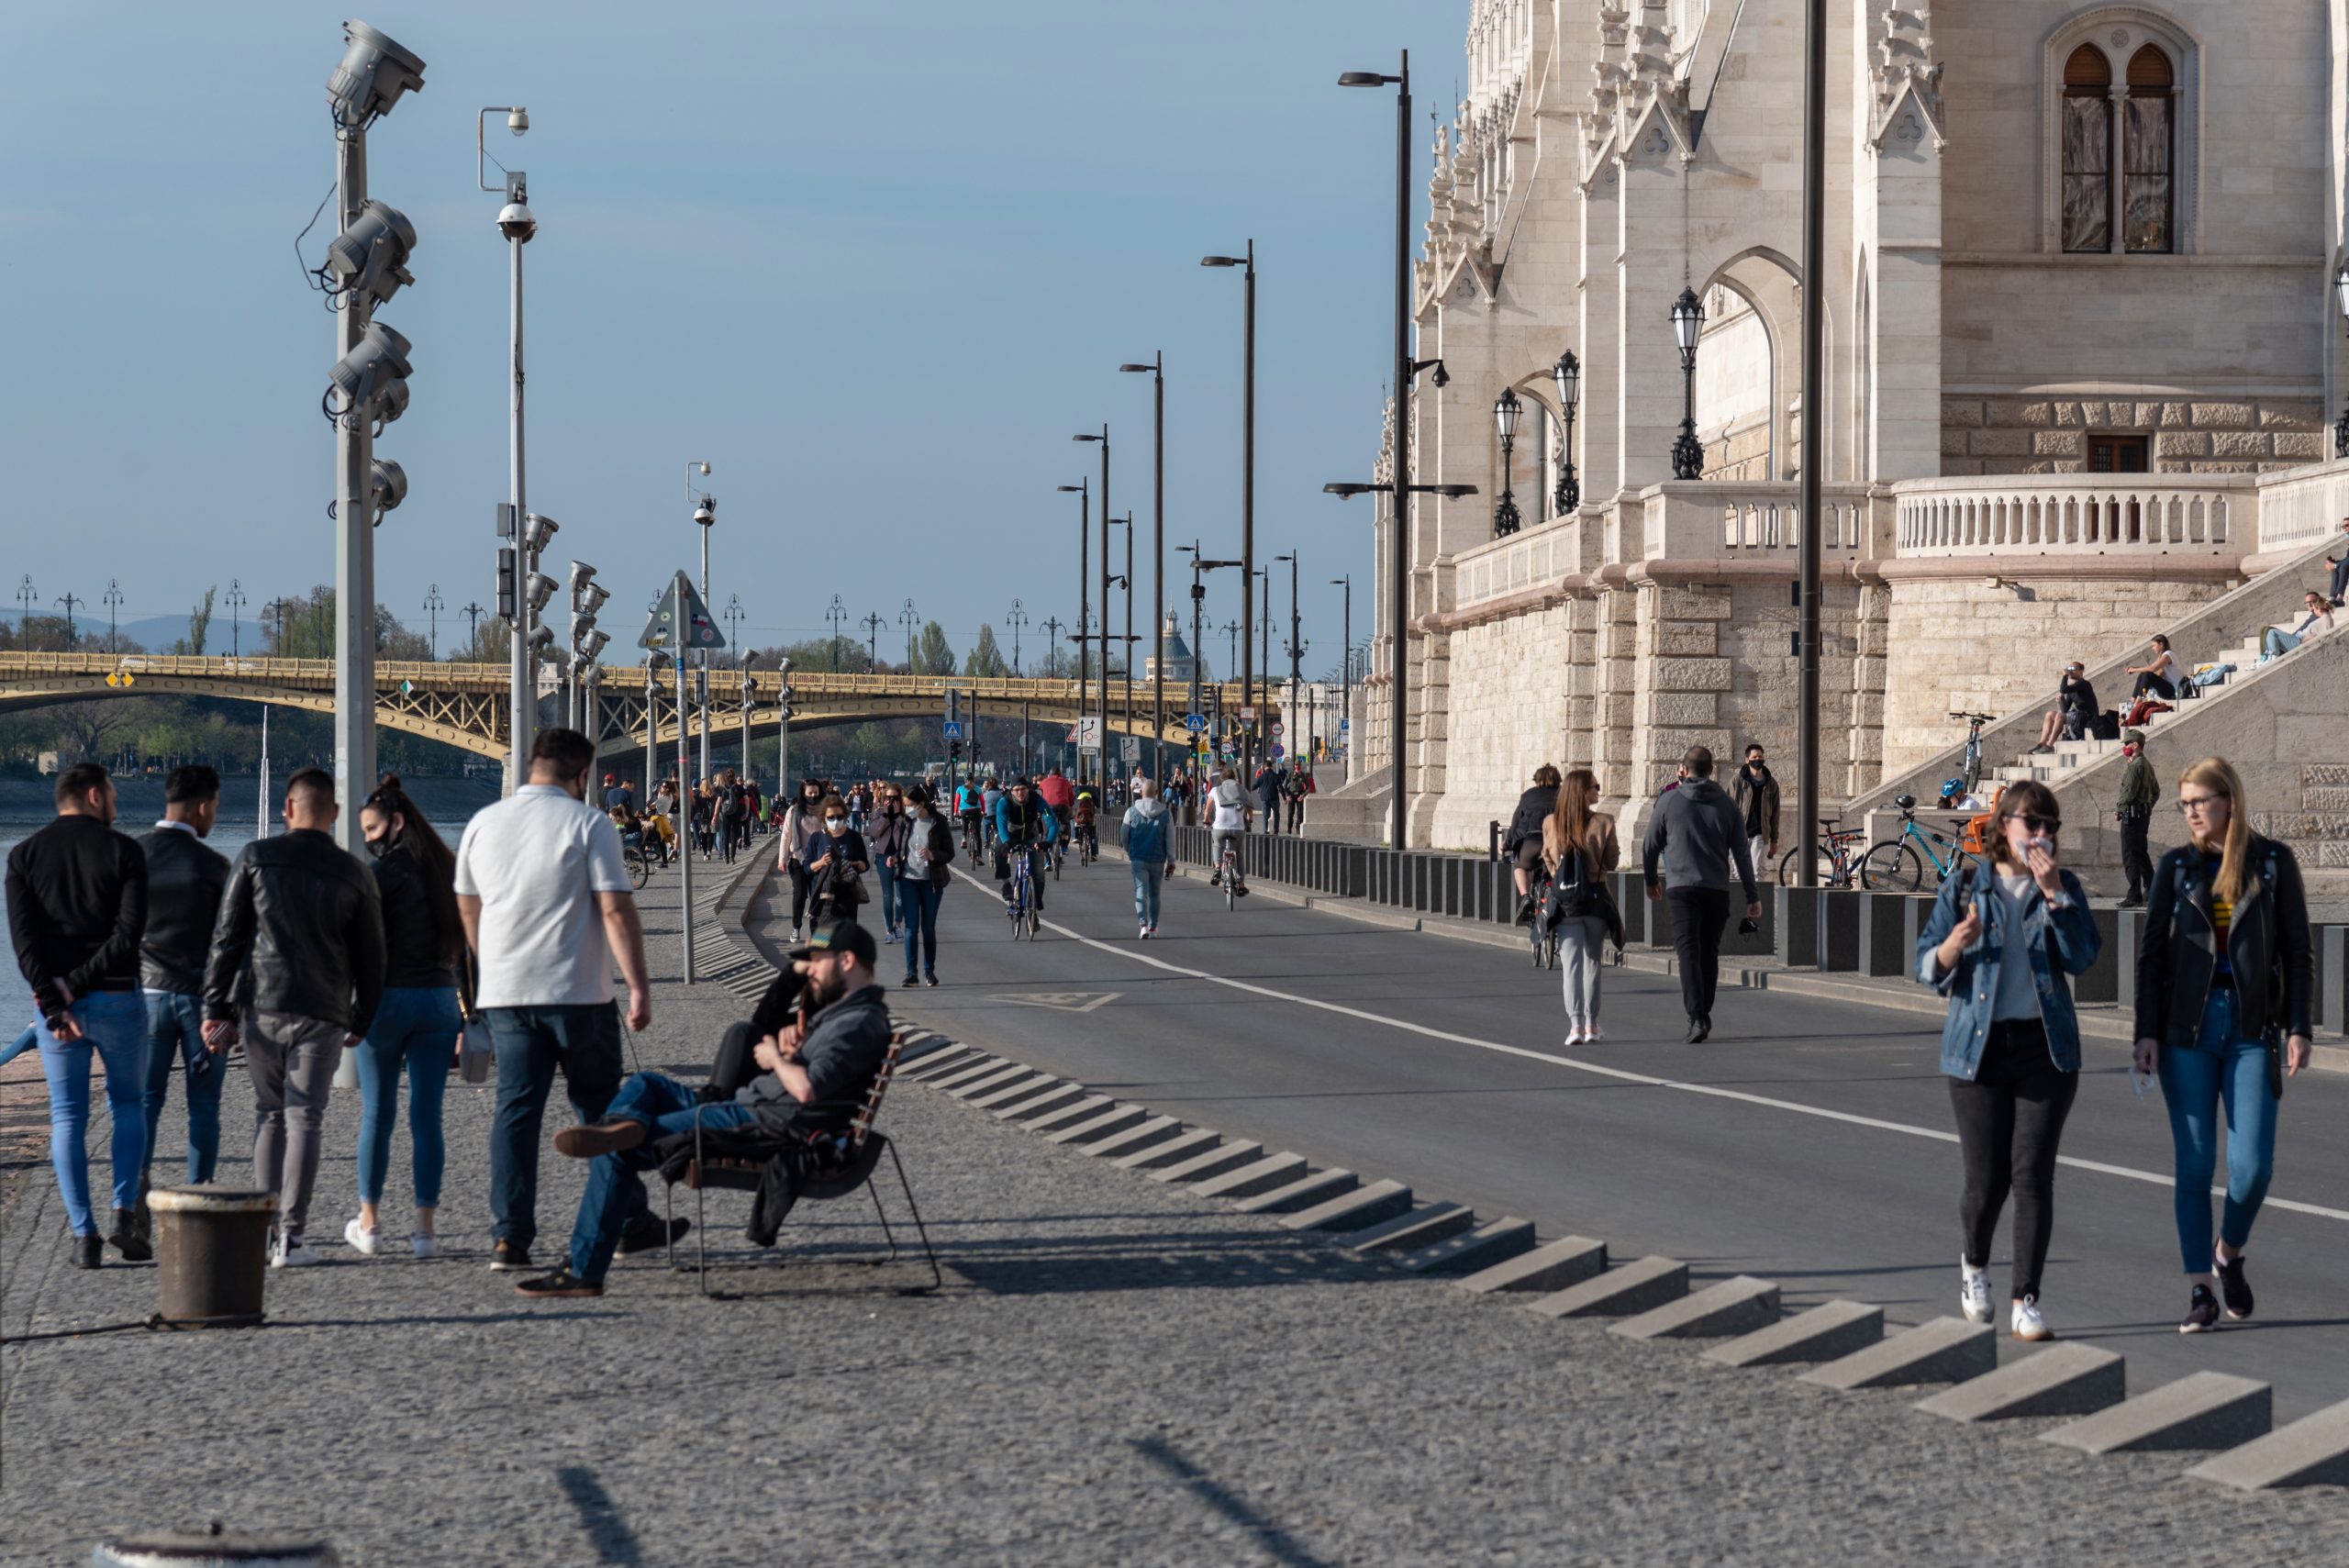 Budapest Danube Embankment Revamp to Start Next Week